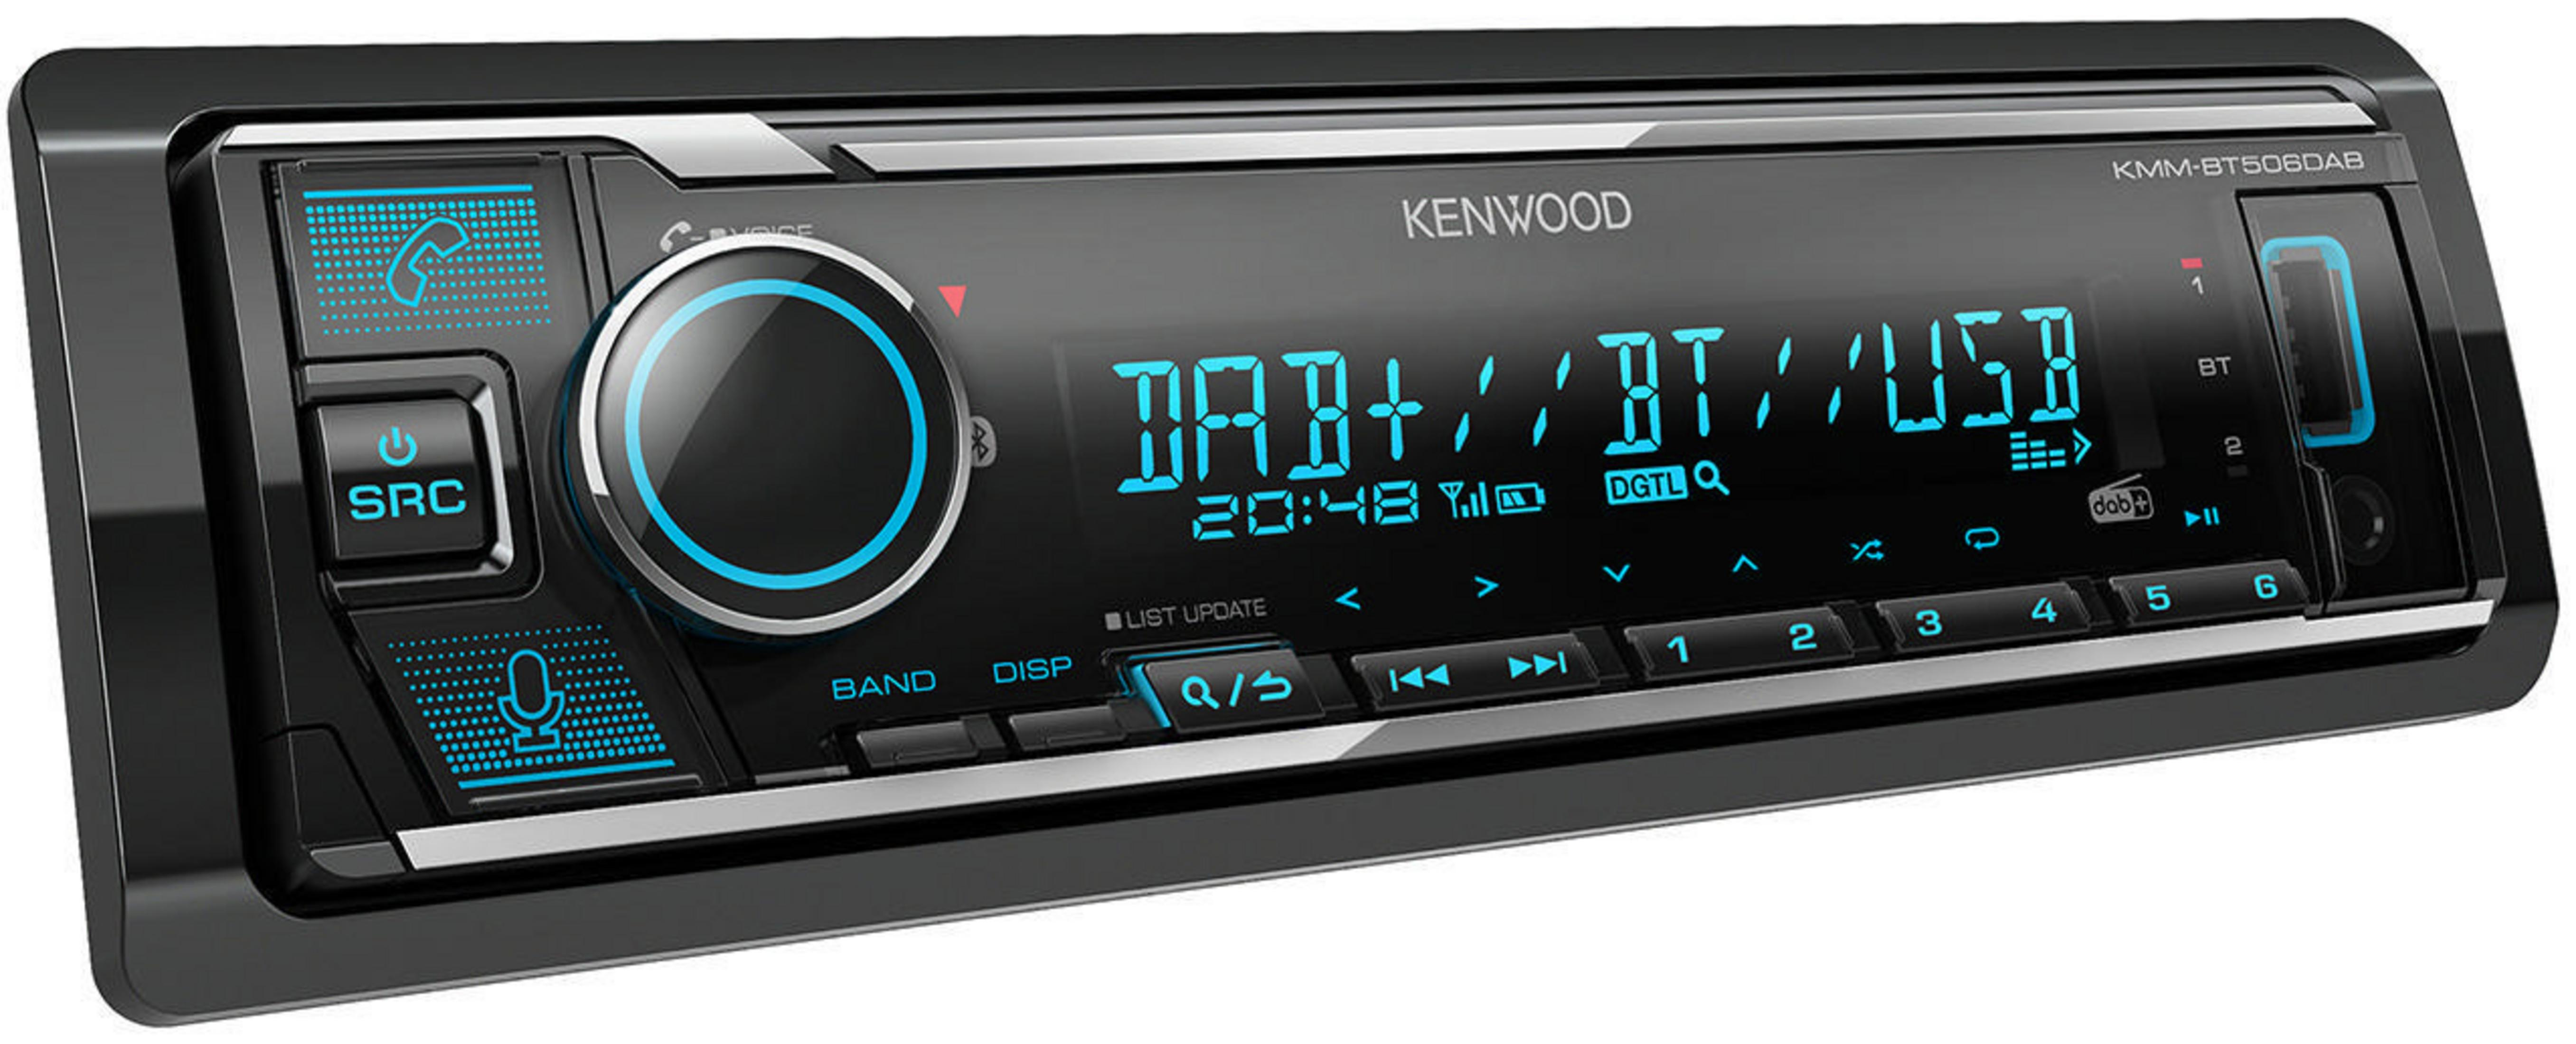 KENWOOD KMM-BT 506 DAB Autoradio 50 1 DIN, Watt